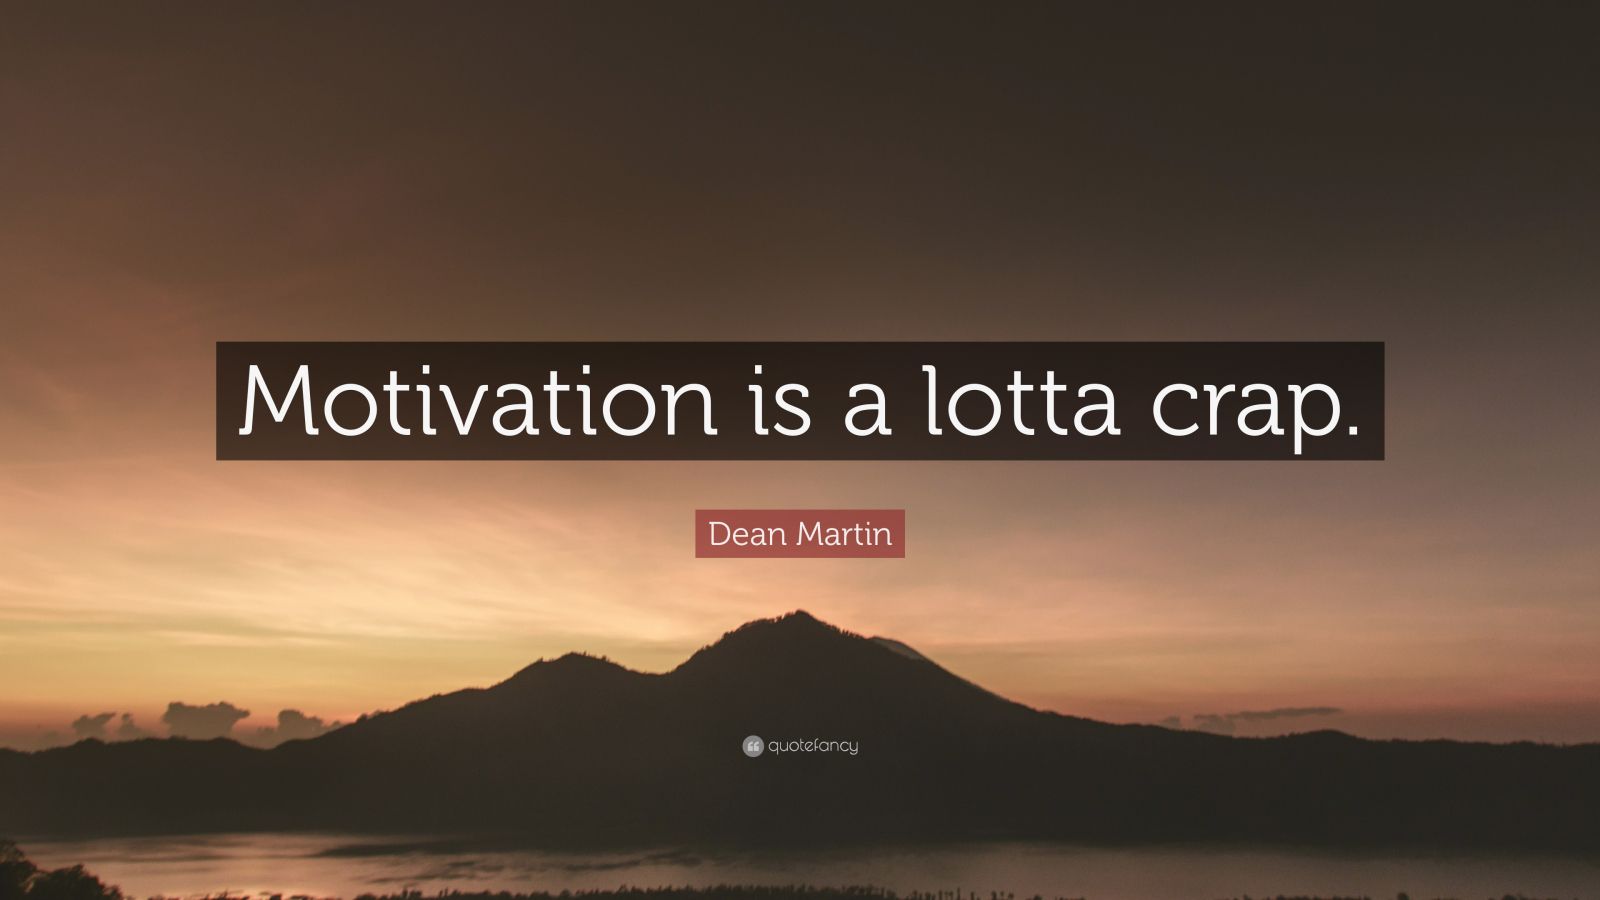 Dean Martin Quote: “Motivation is a lotta crap.”